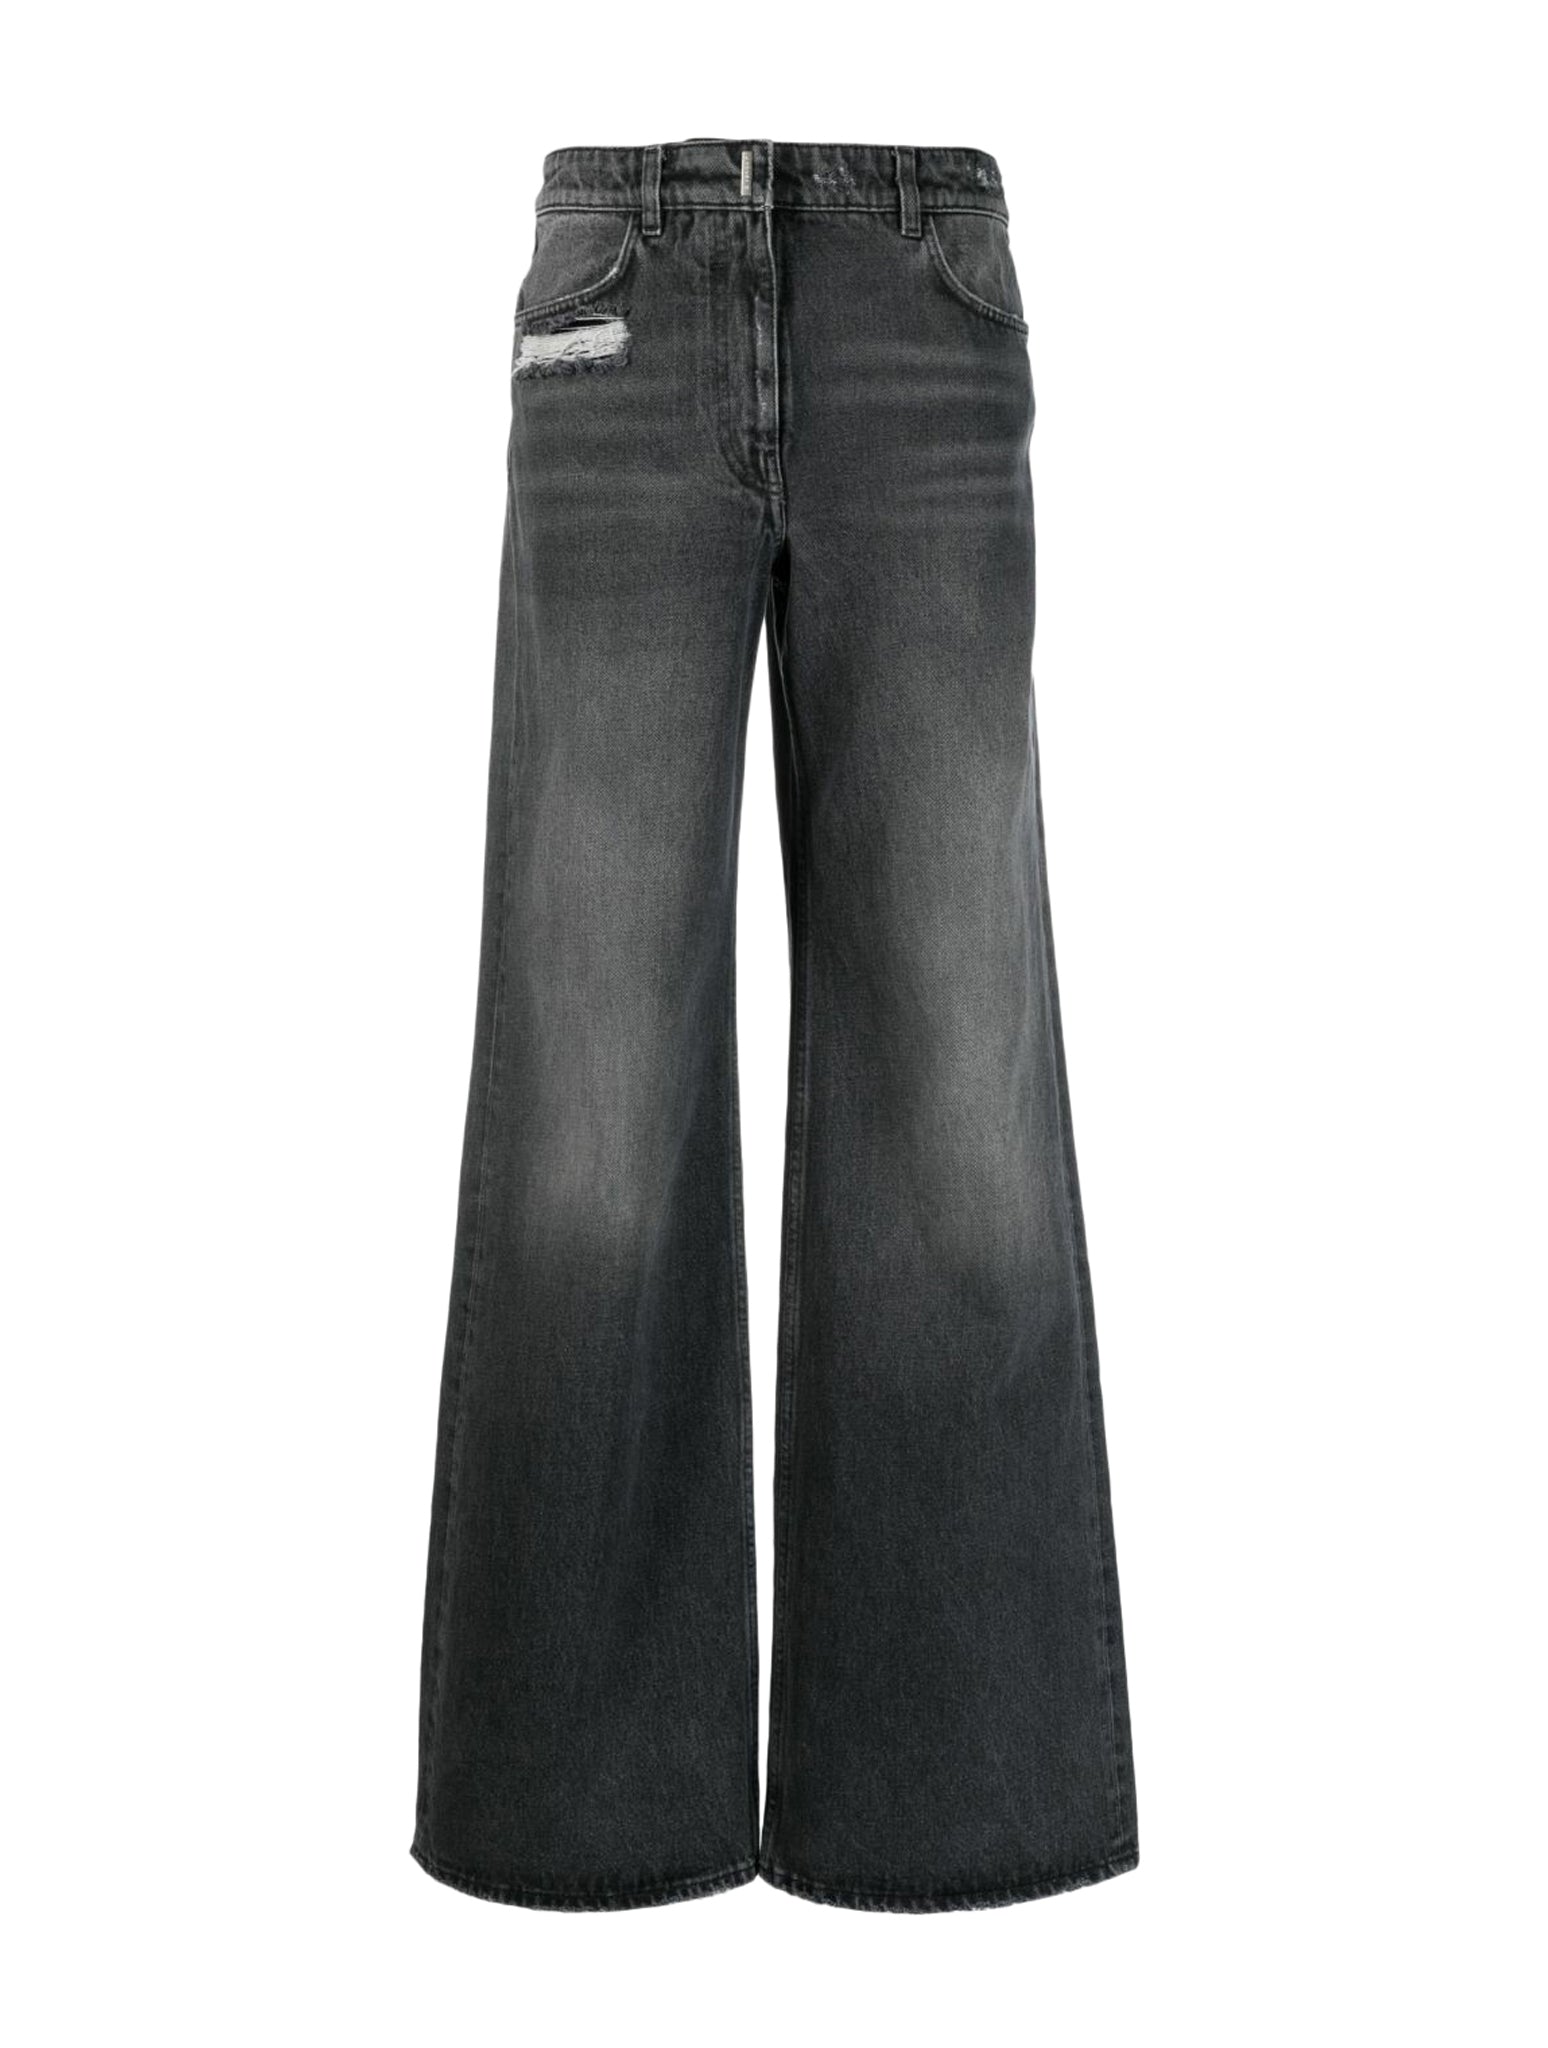 Extra wide denim cotton jeans